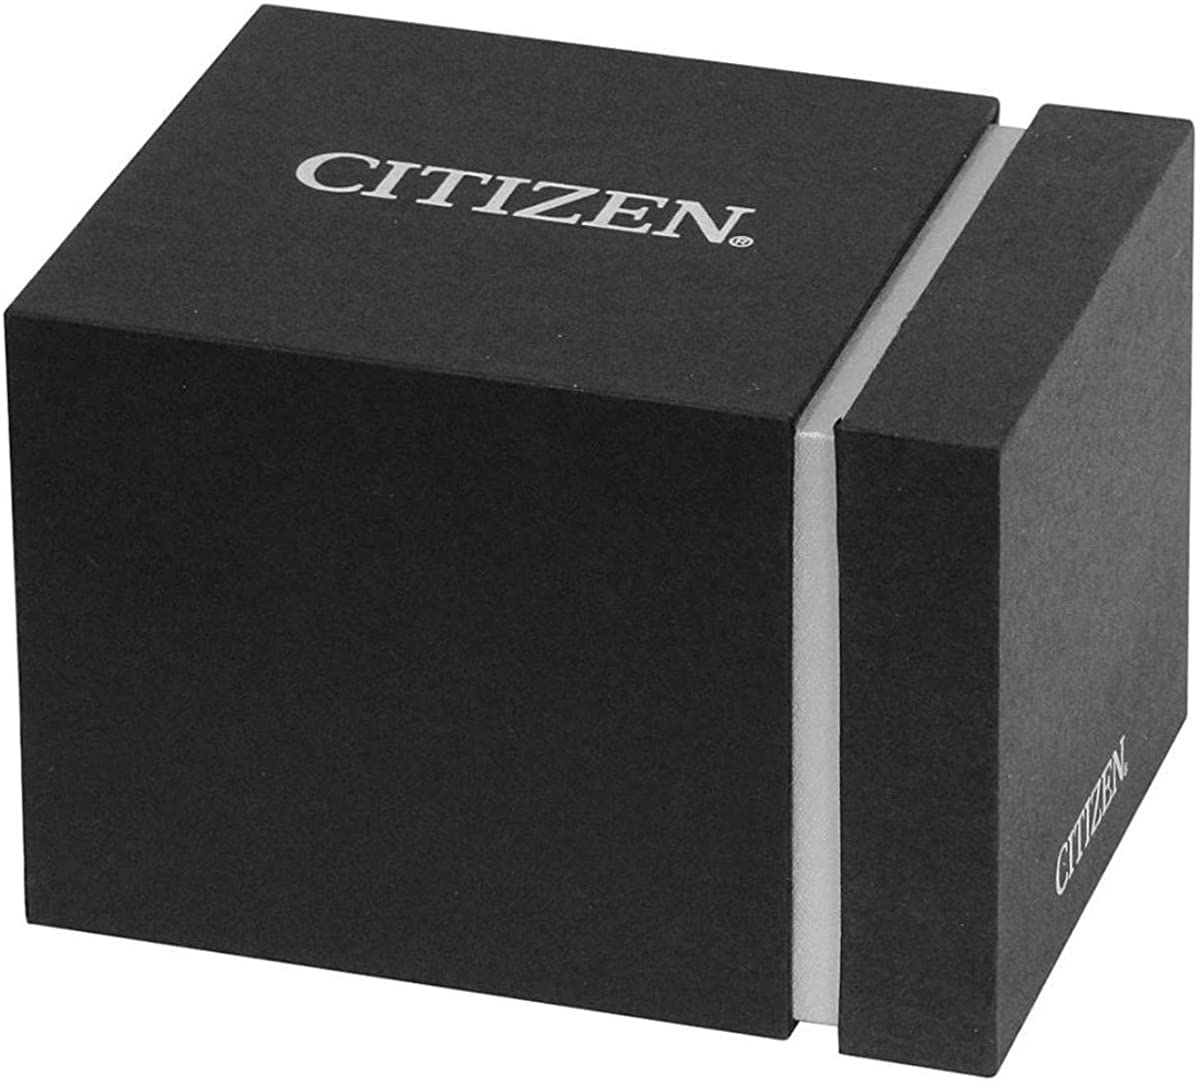 Citizen Men's Watch Analogue Eco-Drive 32020859